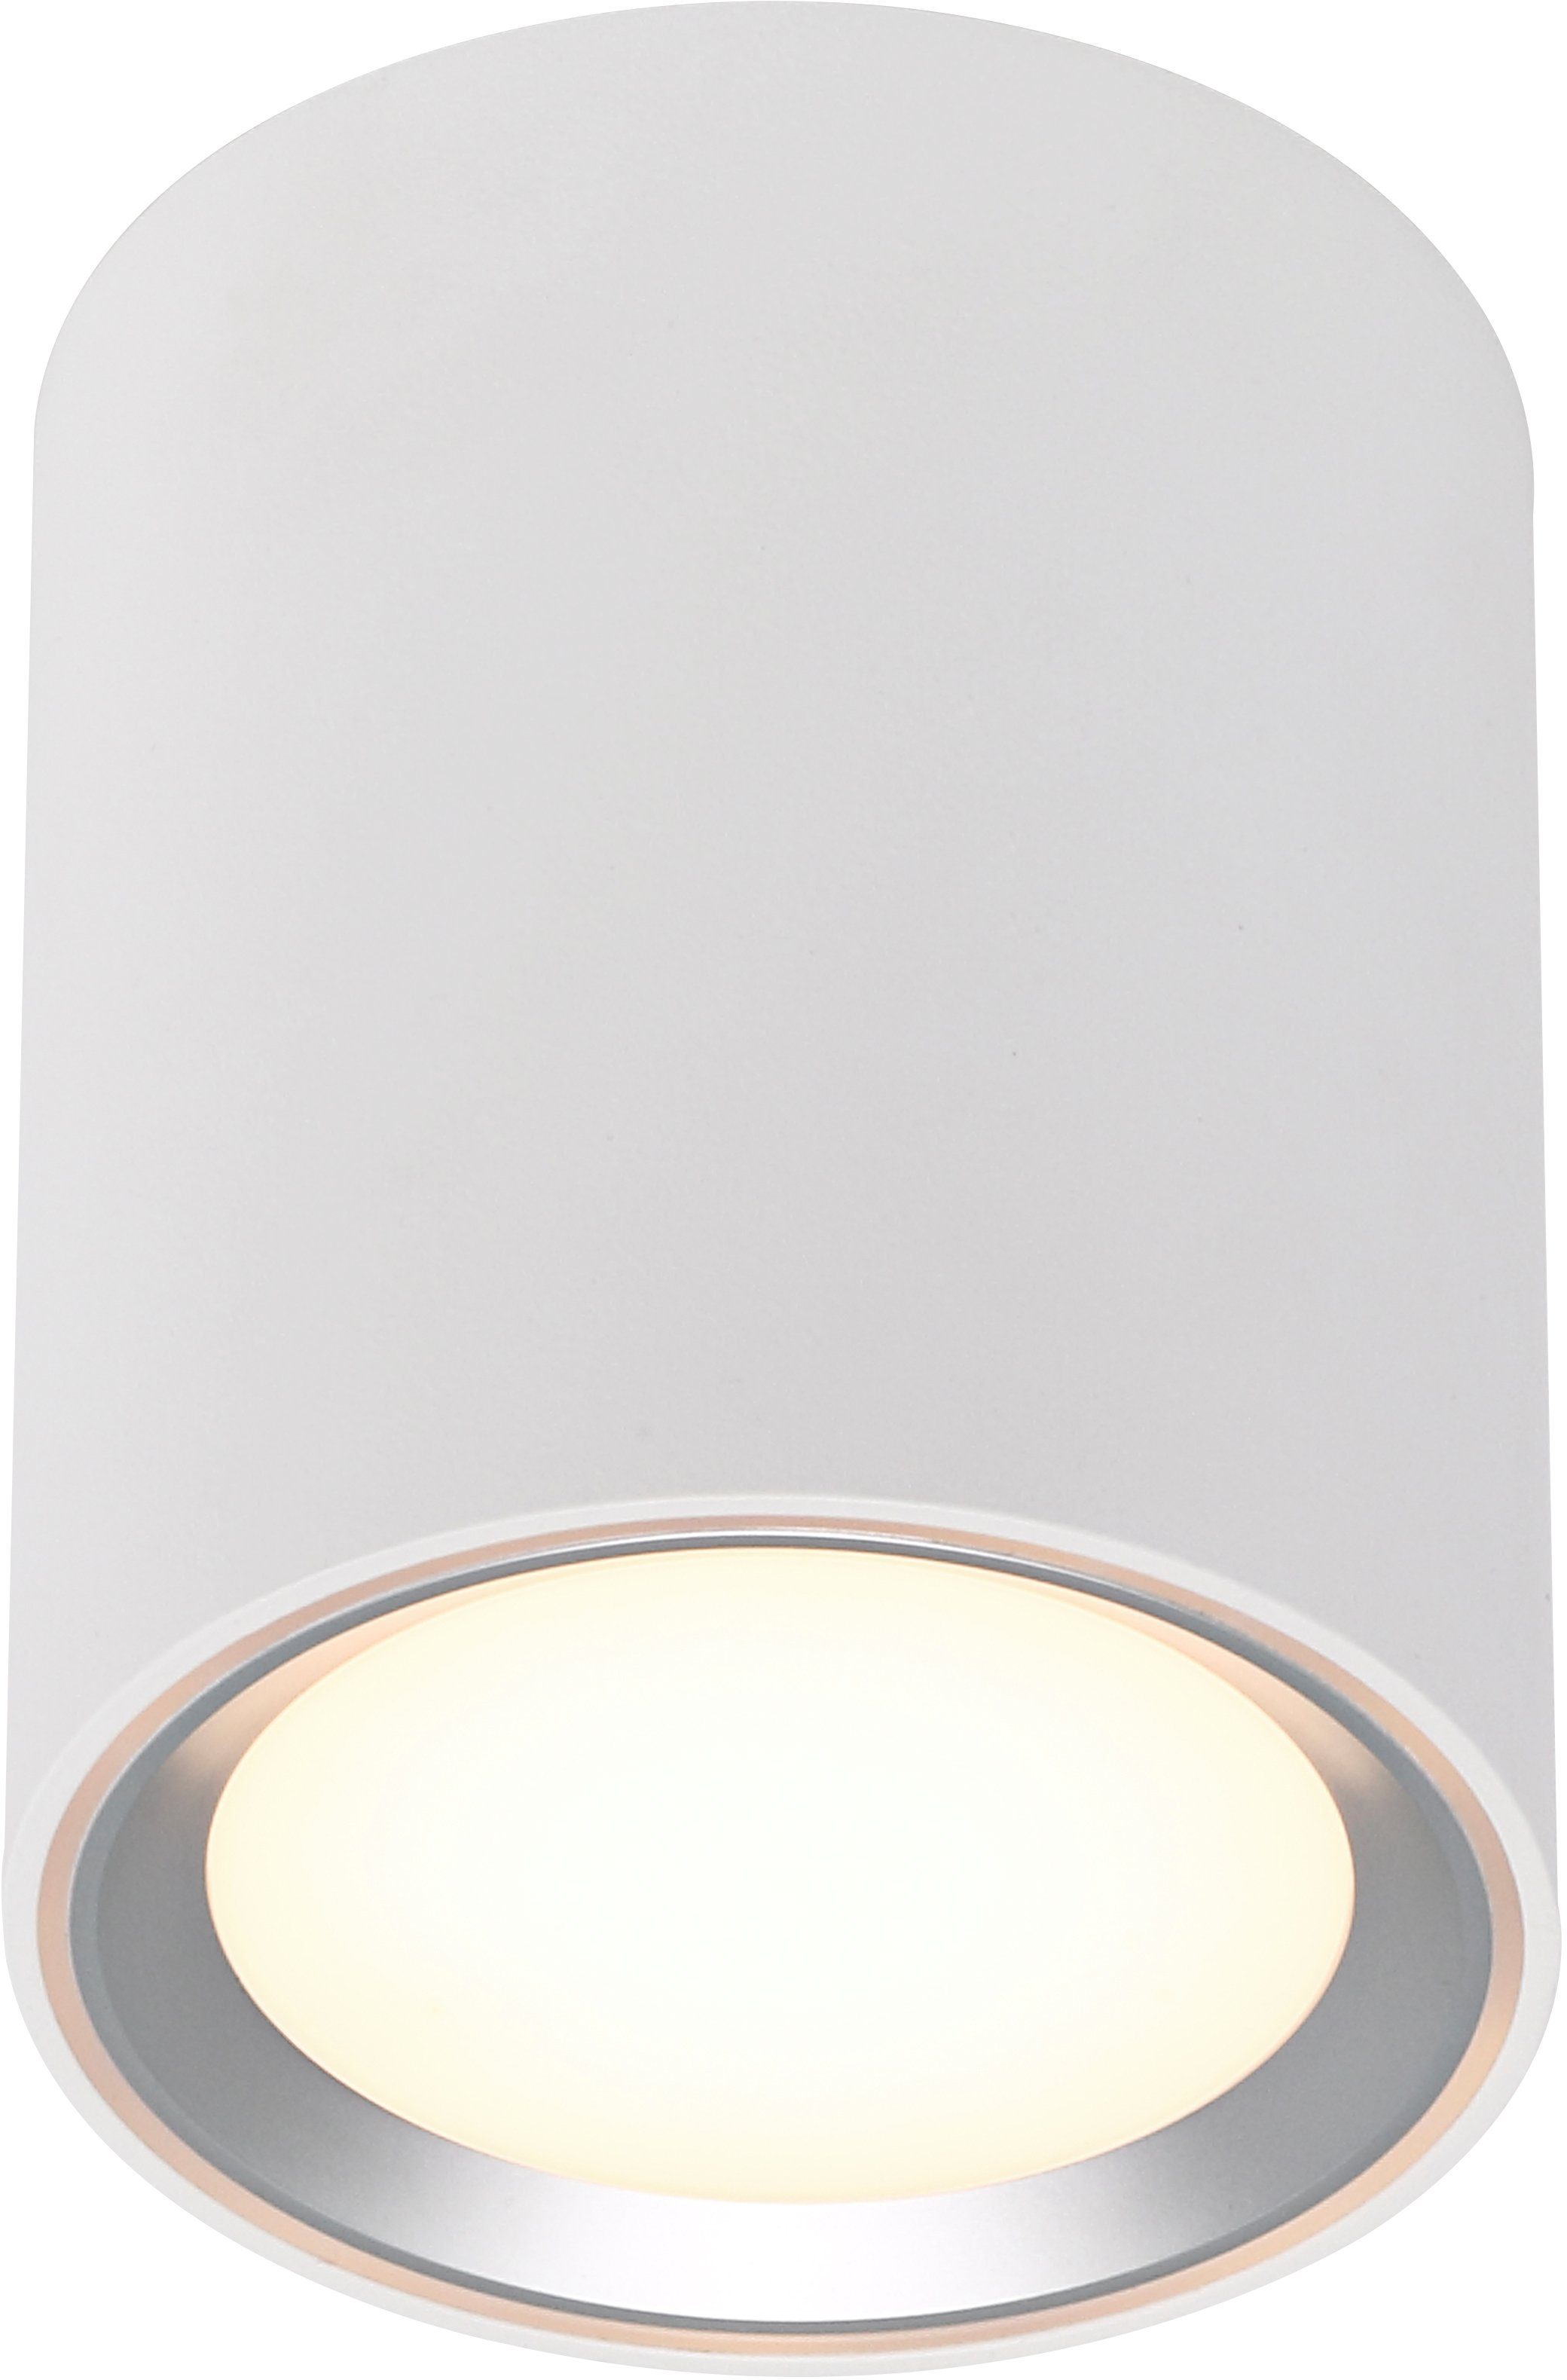 Nordlux LED Deckenspot integriert, LED Fallon, Deckenleuchte, Warmweiß, fest LED Dimmfunktion, Deckenlampe LED